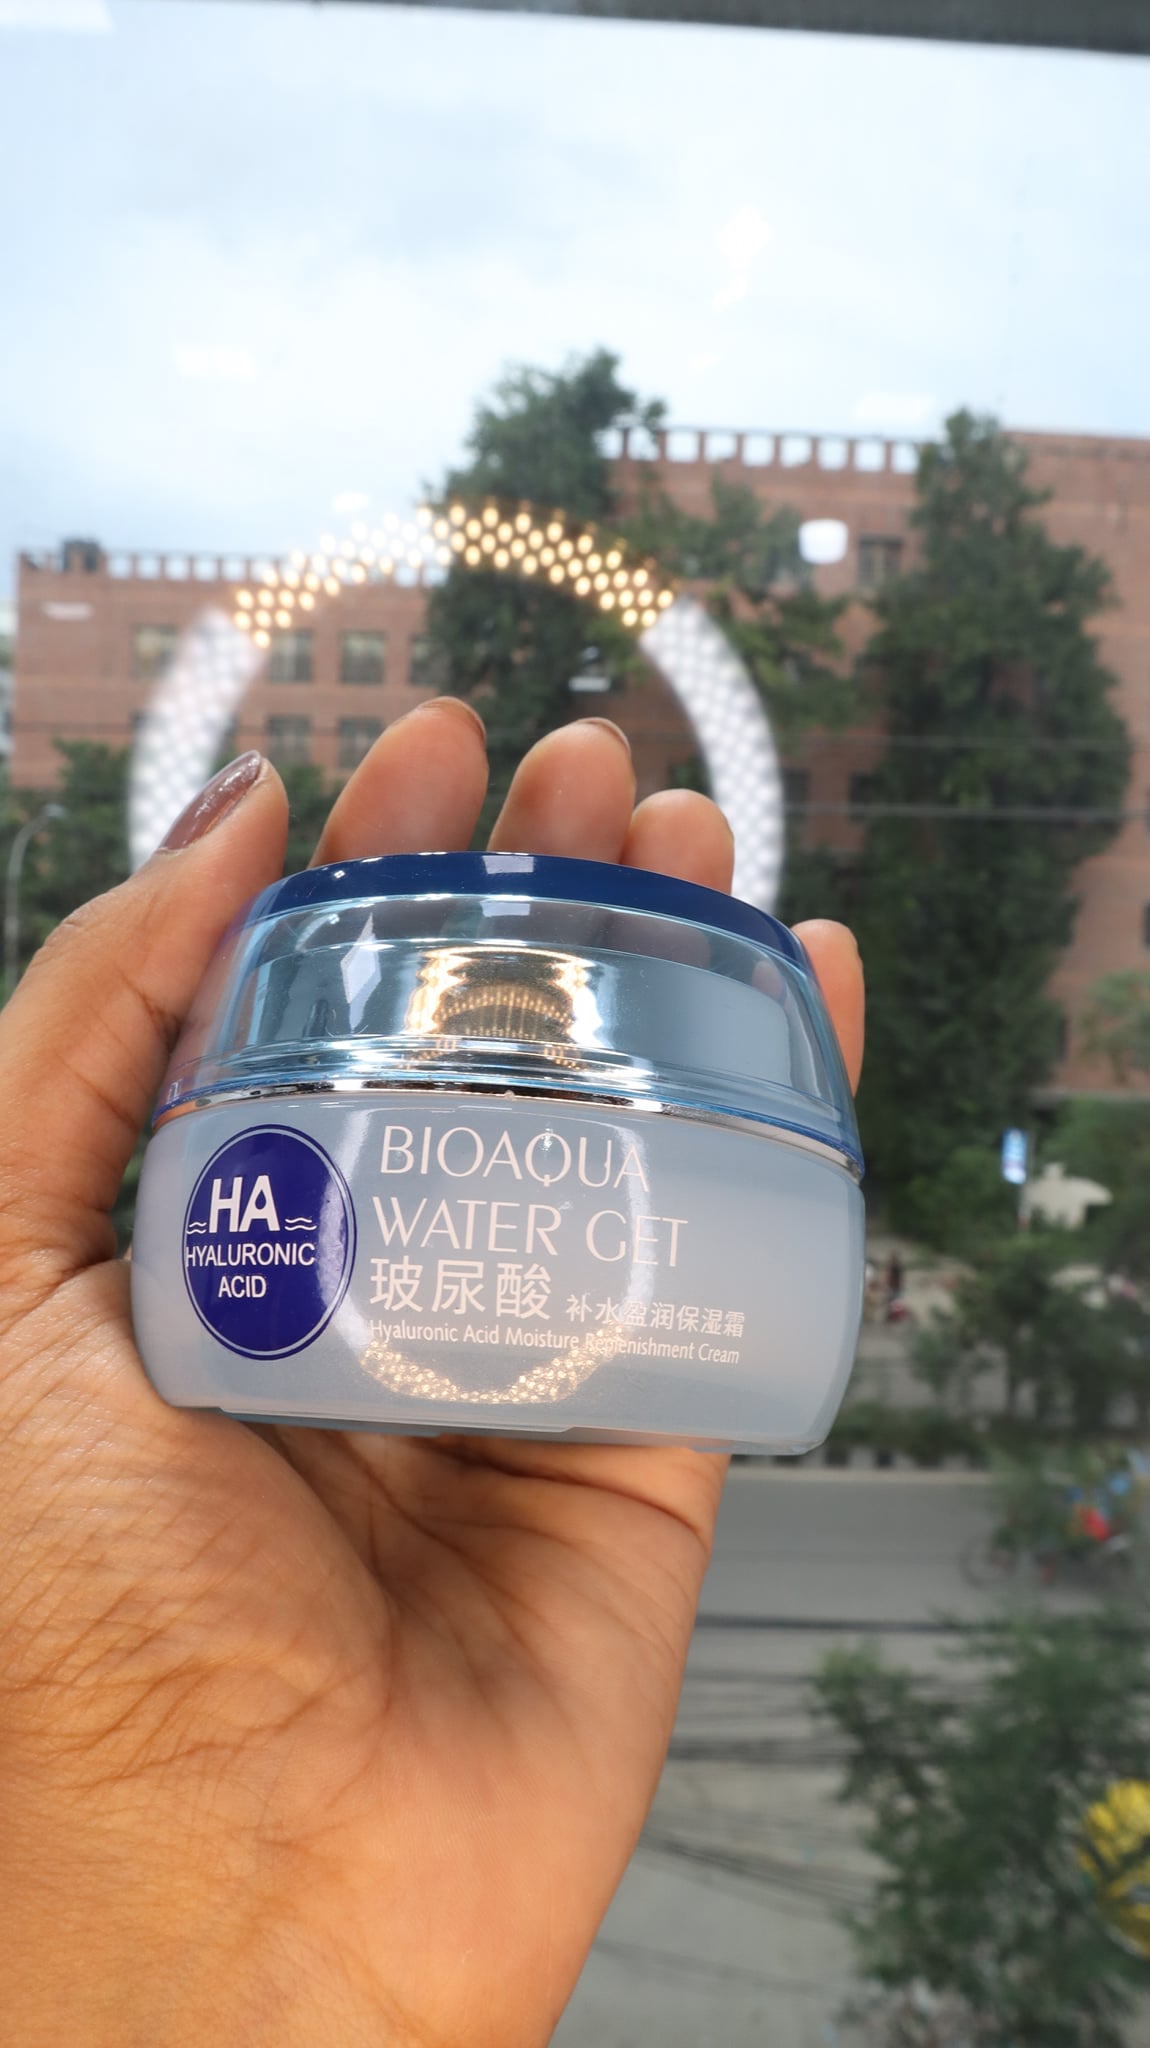 BIOAQUA Ha Hyaluronic Acid Moisture Replenishment Cream